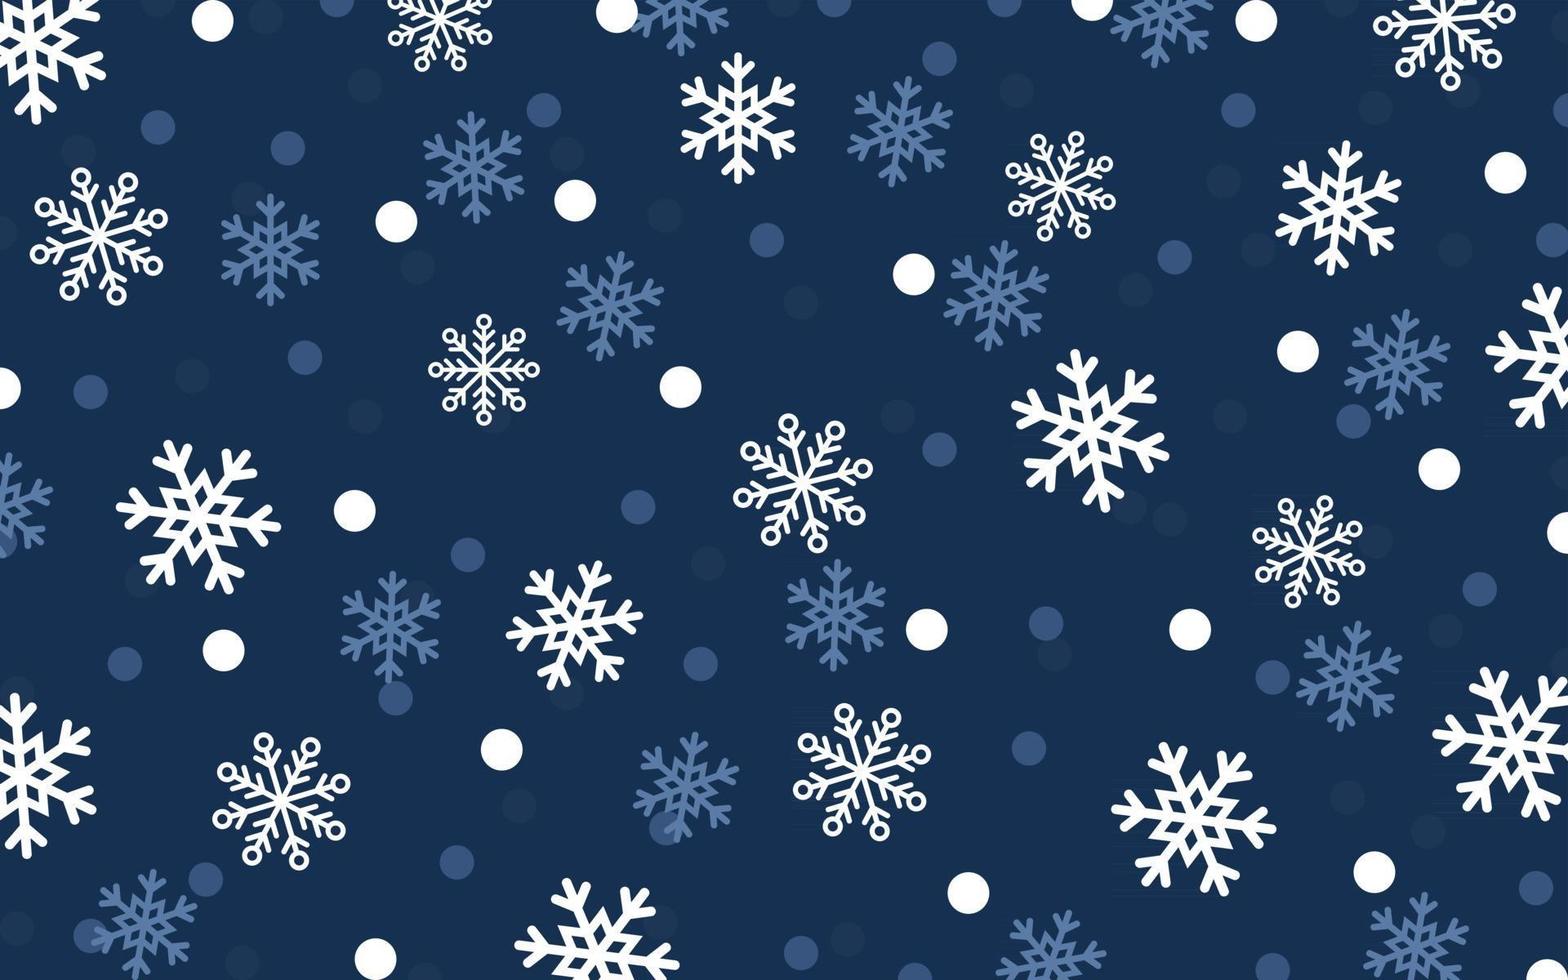 Falling snow on dark blue background vector